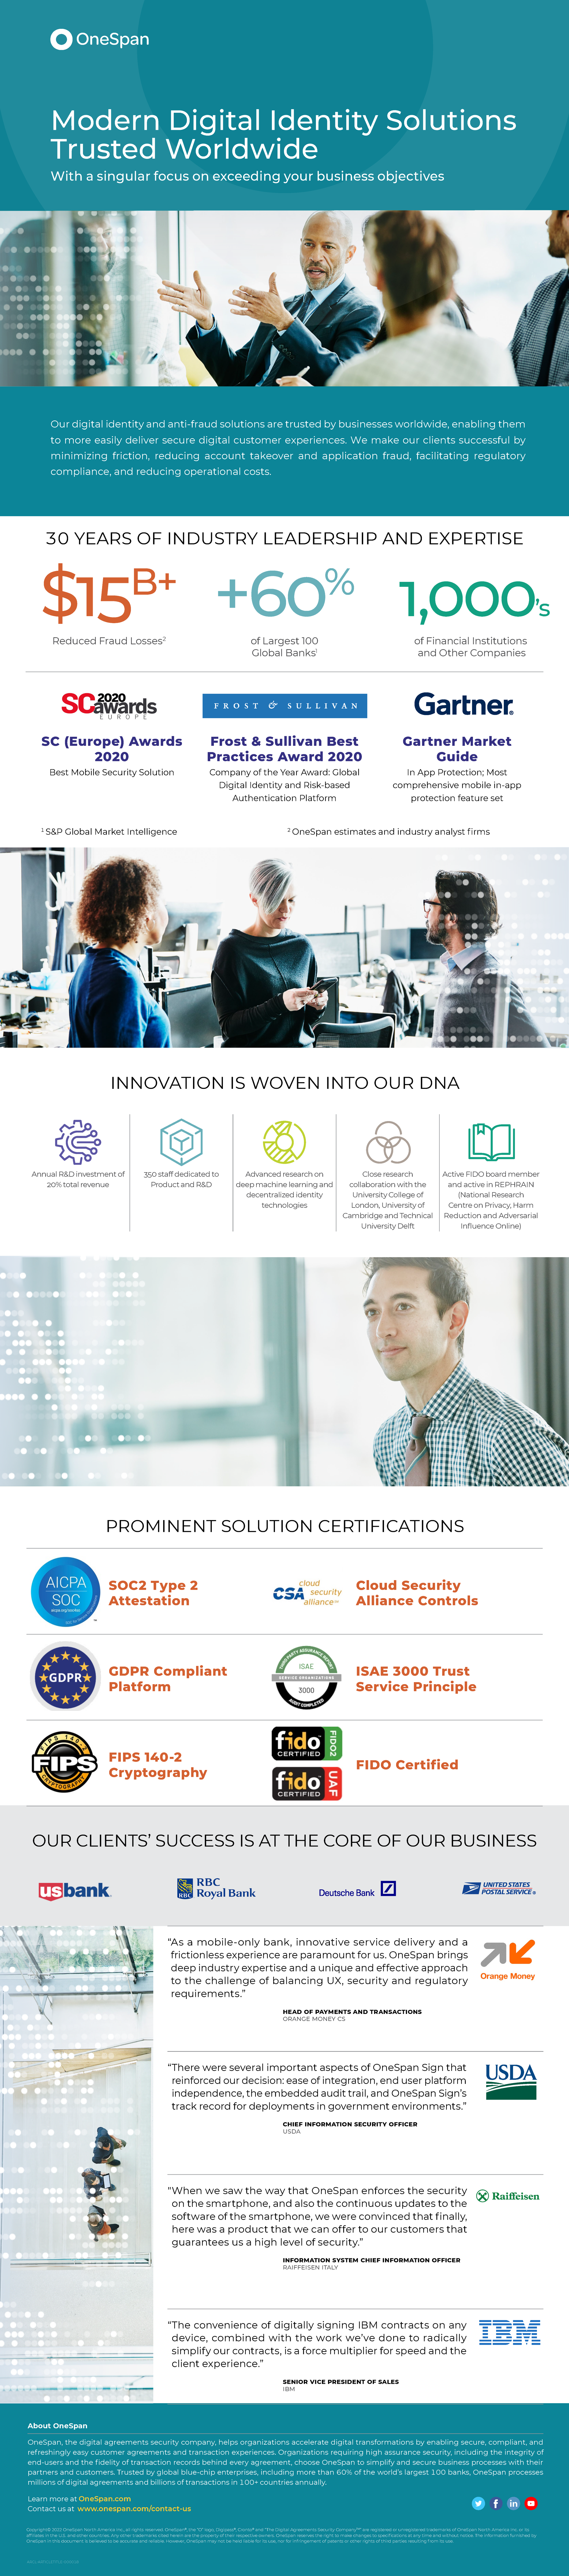 OneSpan-Infographic-Modern-Digital-Identity-Solutions